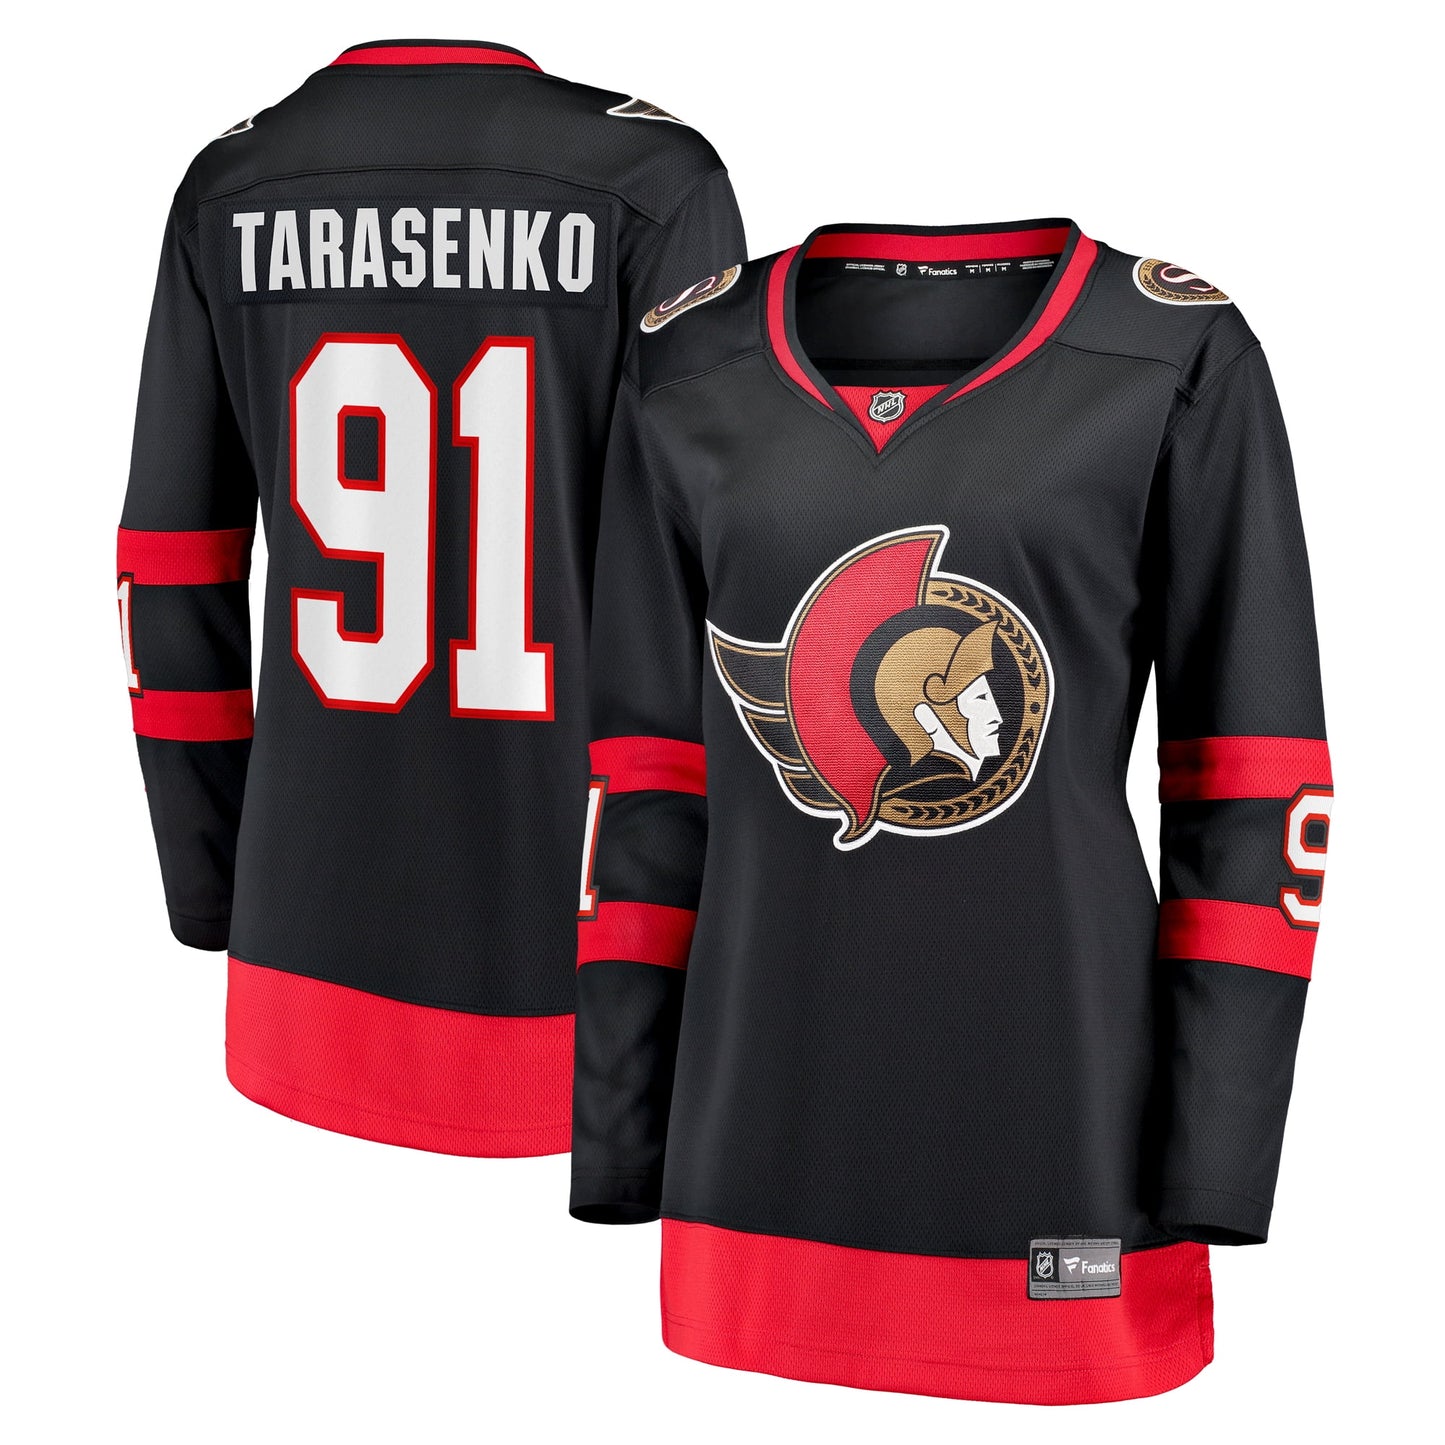 Women's Fanatics Branded Vladimir Tarasenko Black Ottawa Senators Home Breakaway Player Jersey